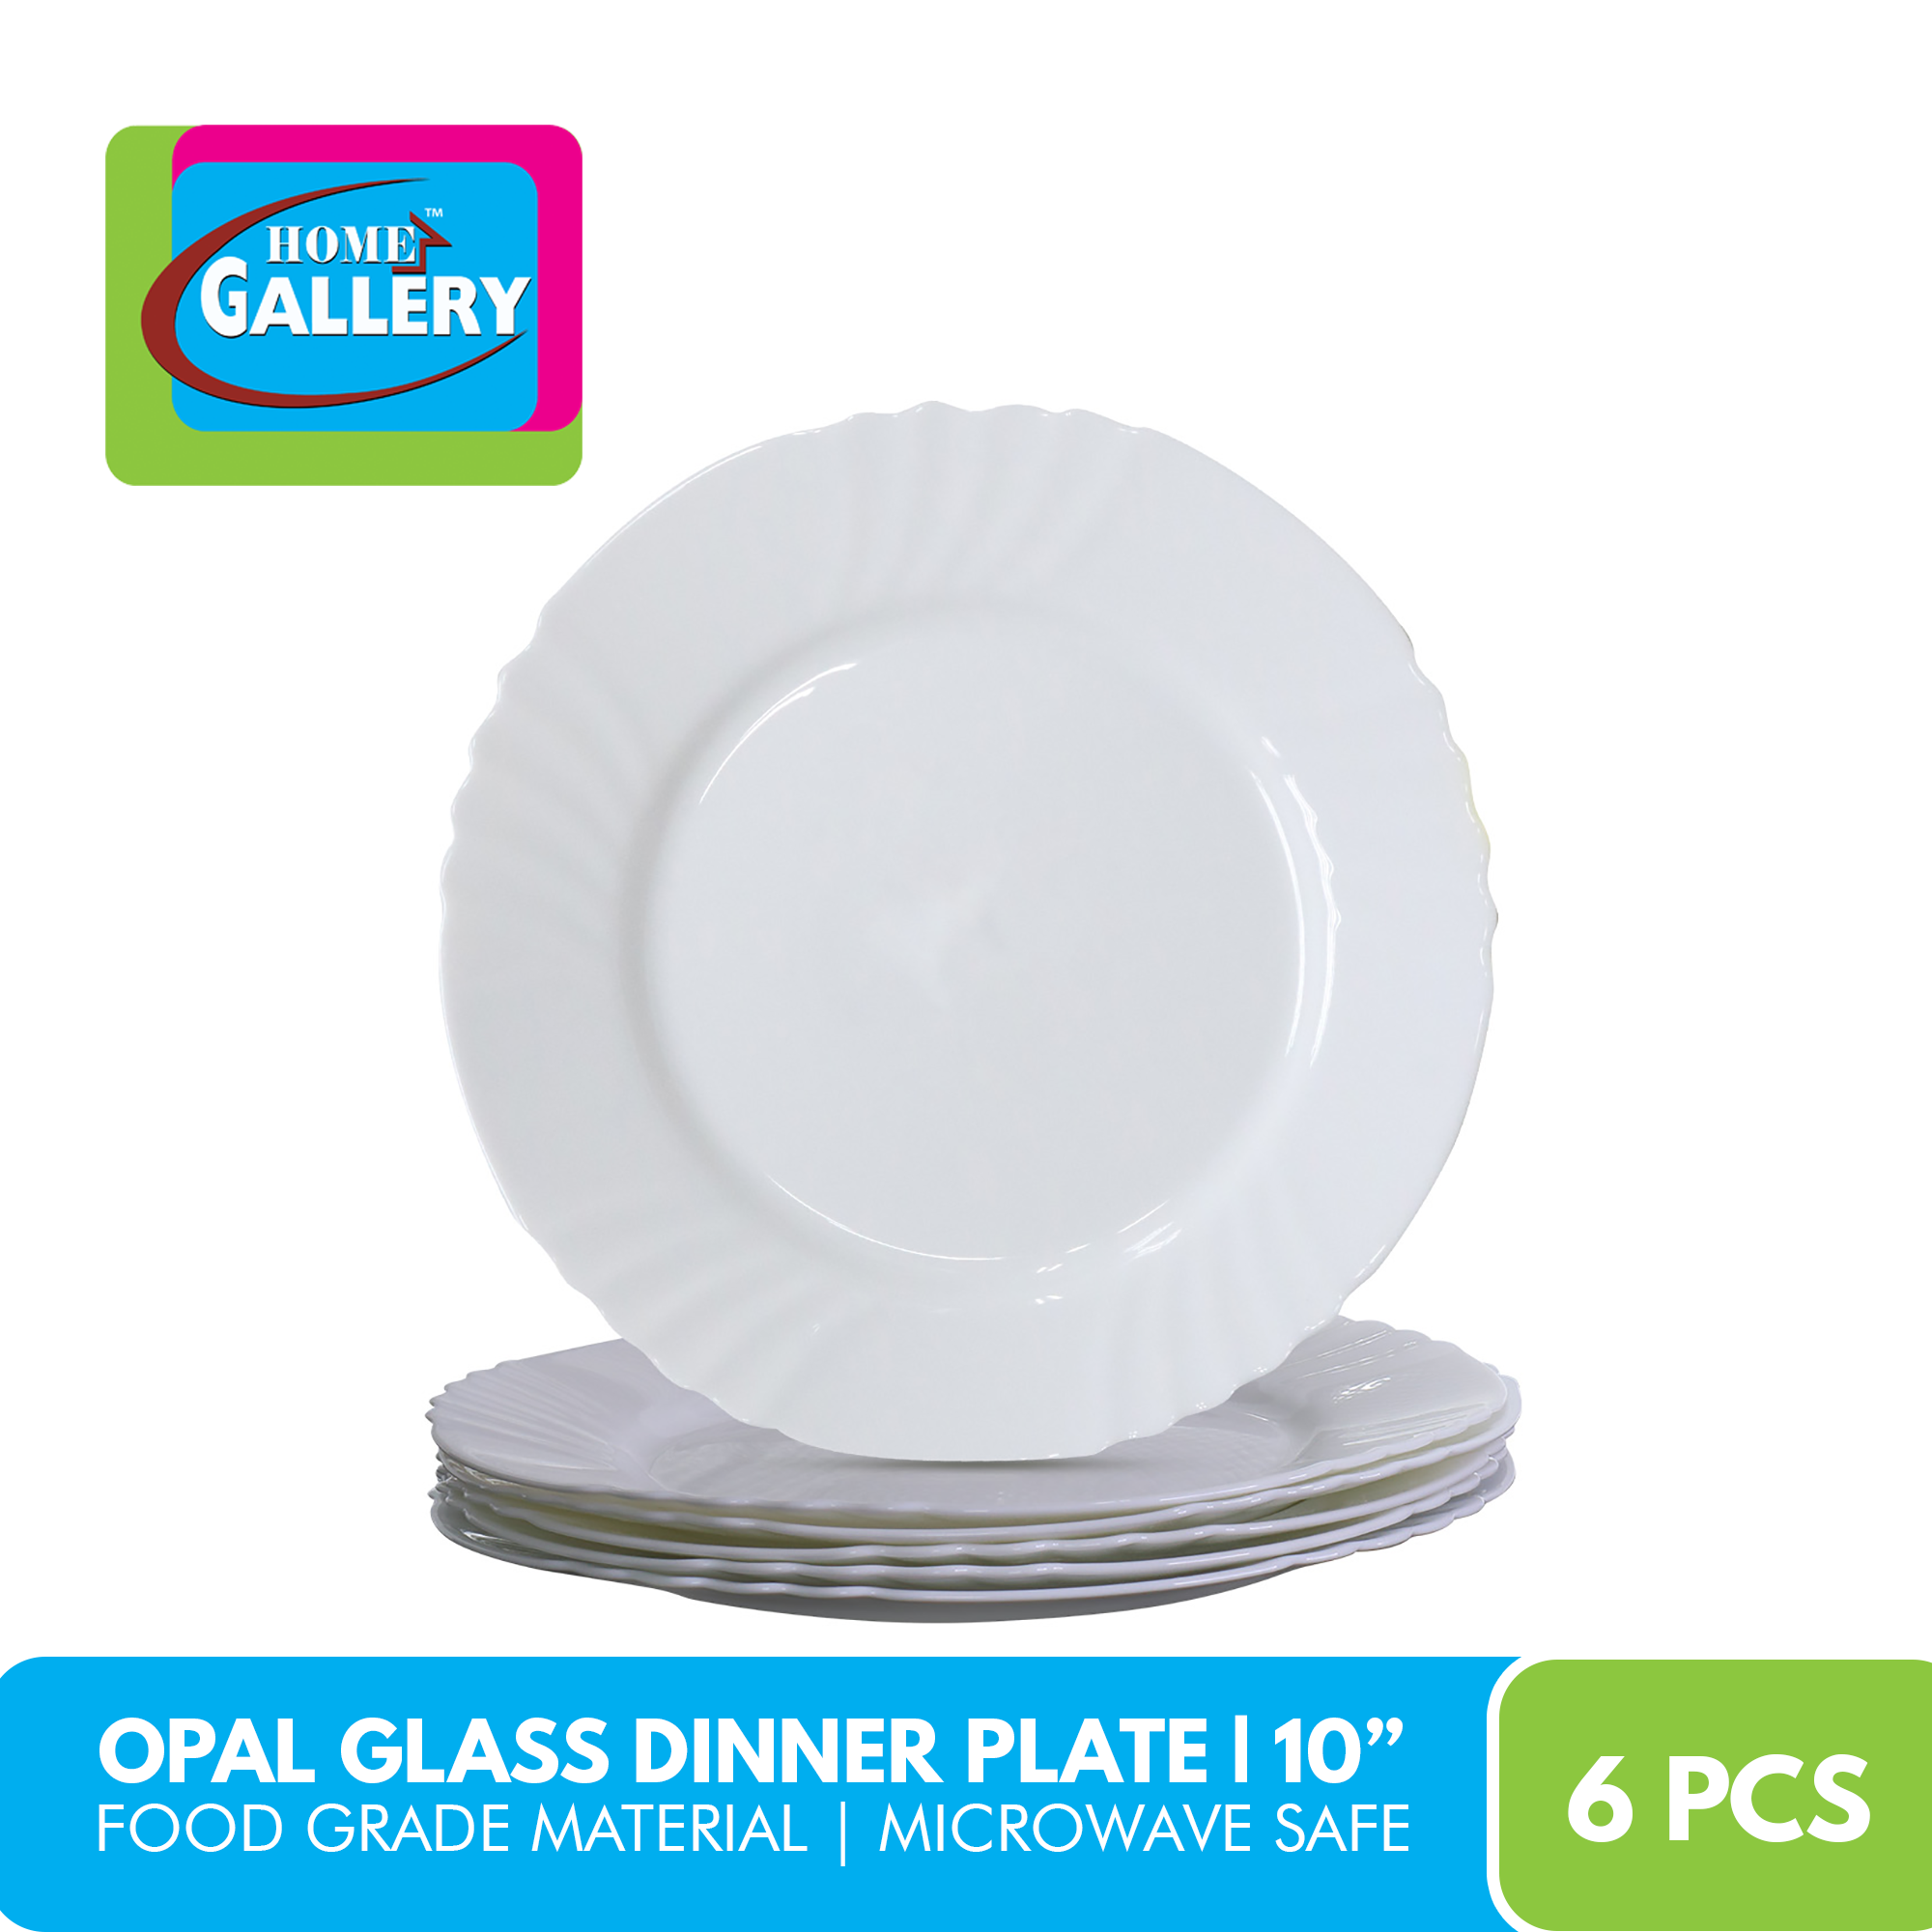 Home Gallery Opal Glass Dinner Plate 6pcs | 10"